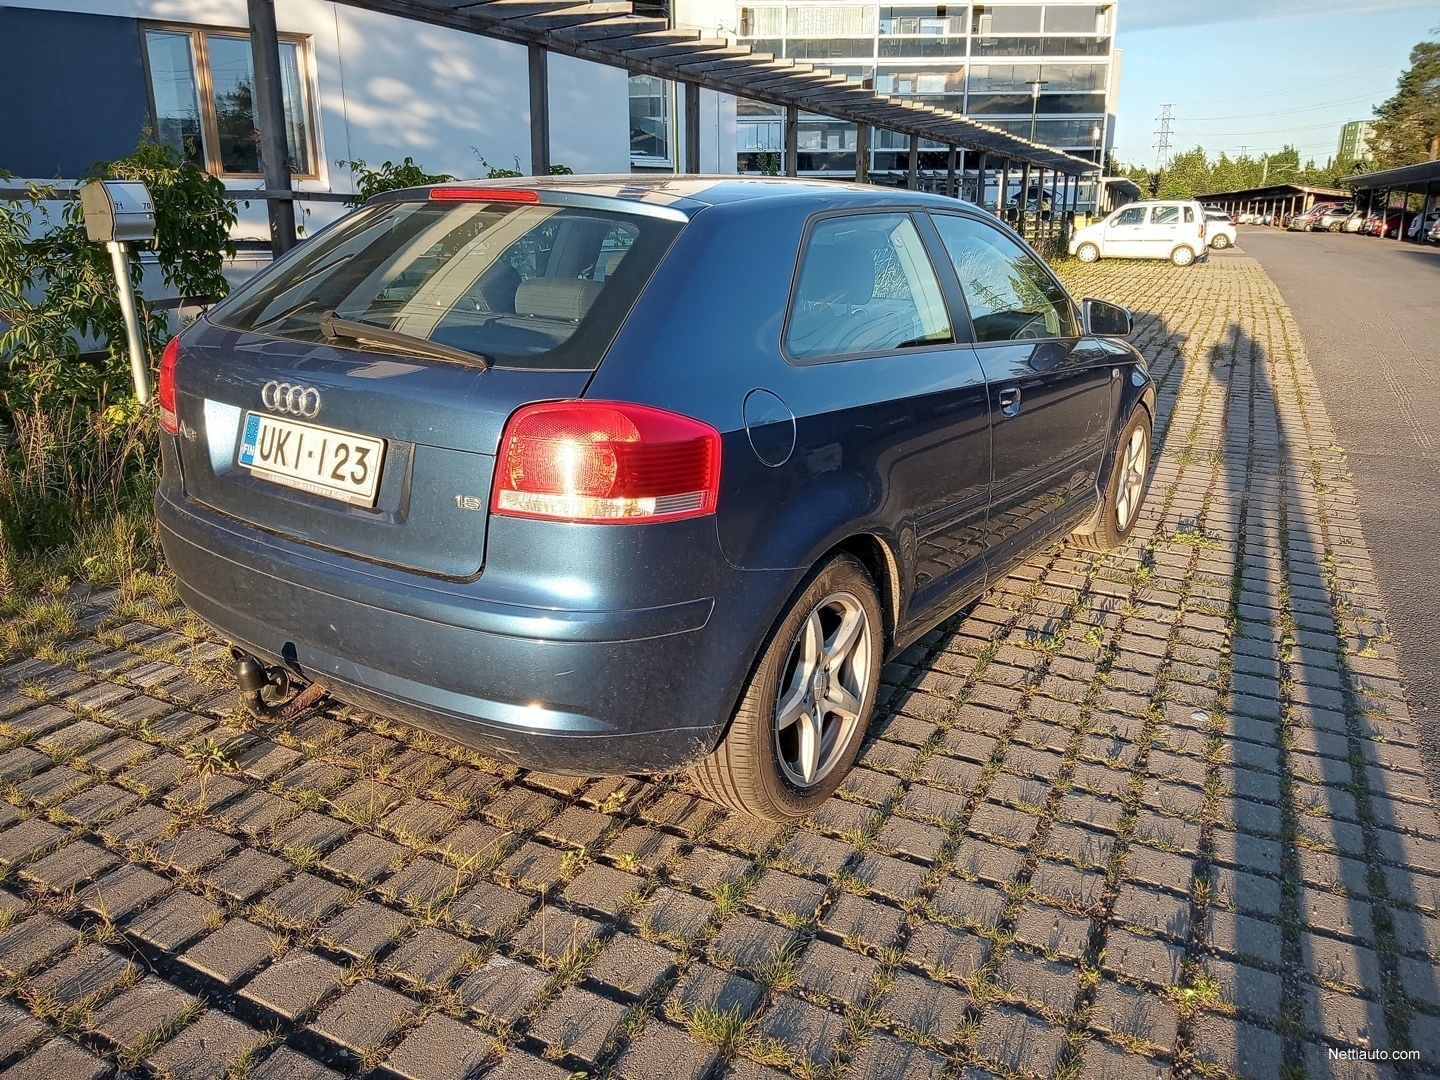 Audi A3 Hatchback 2003 - Used vehicle - Nettiauto